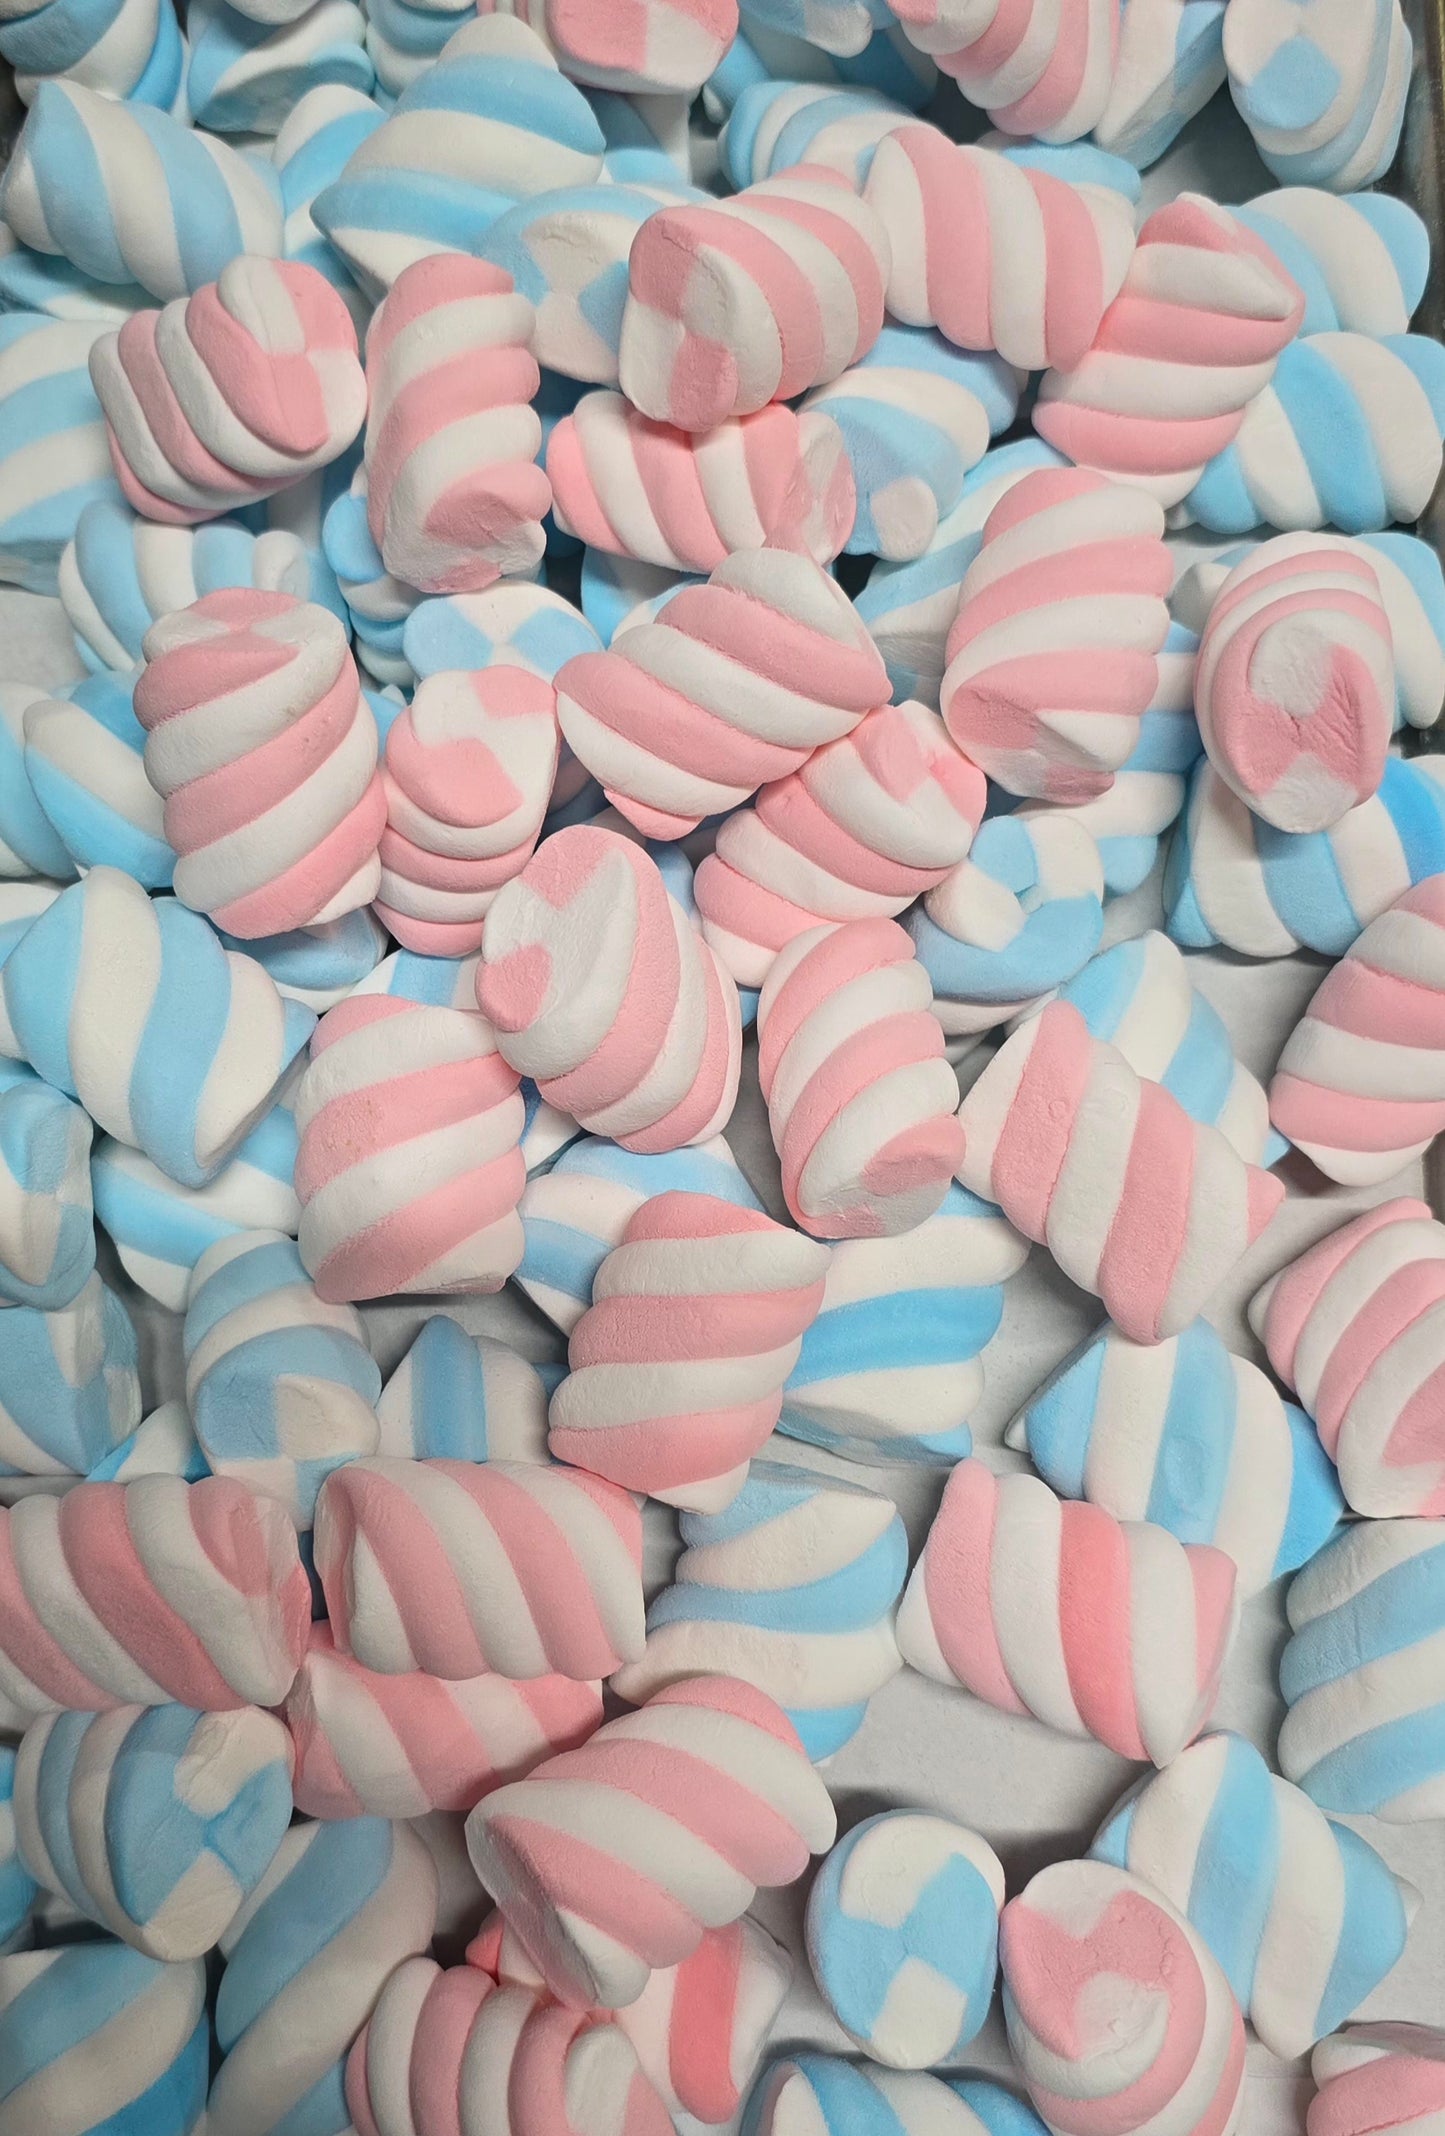 Freeze Dried Pink And Blue Marshmallow Twists - 8pcs